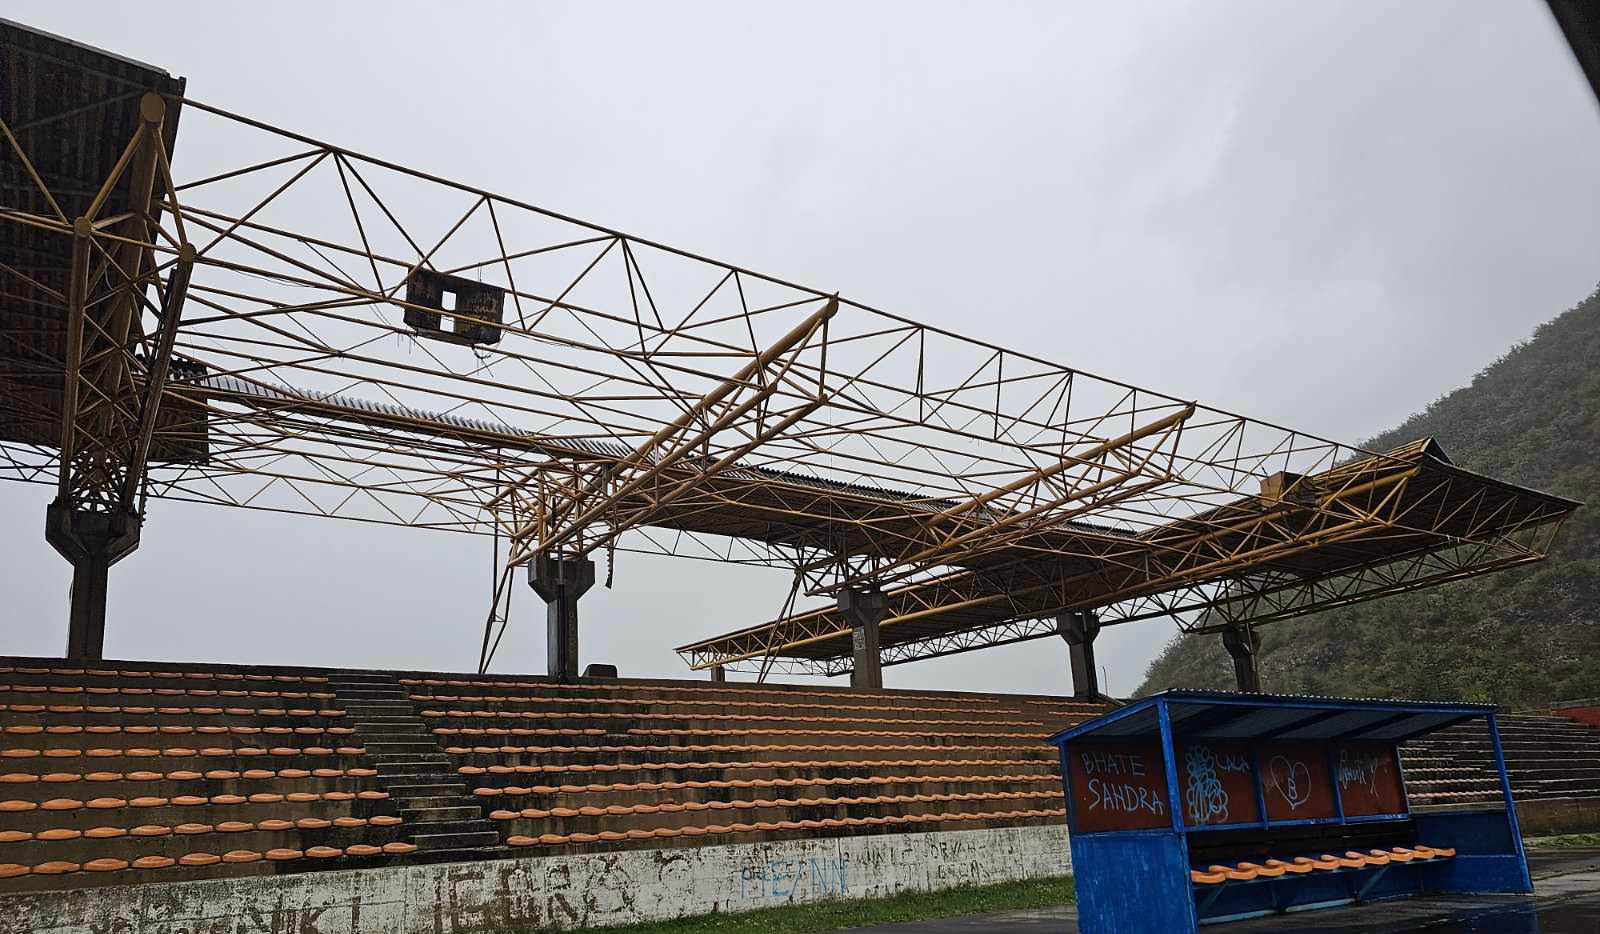  vjetar oštetio krov stadiona u drvaru 